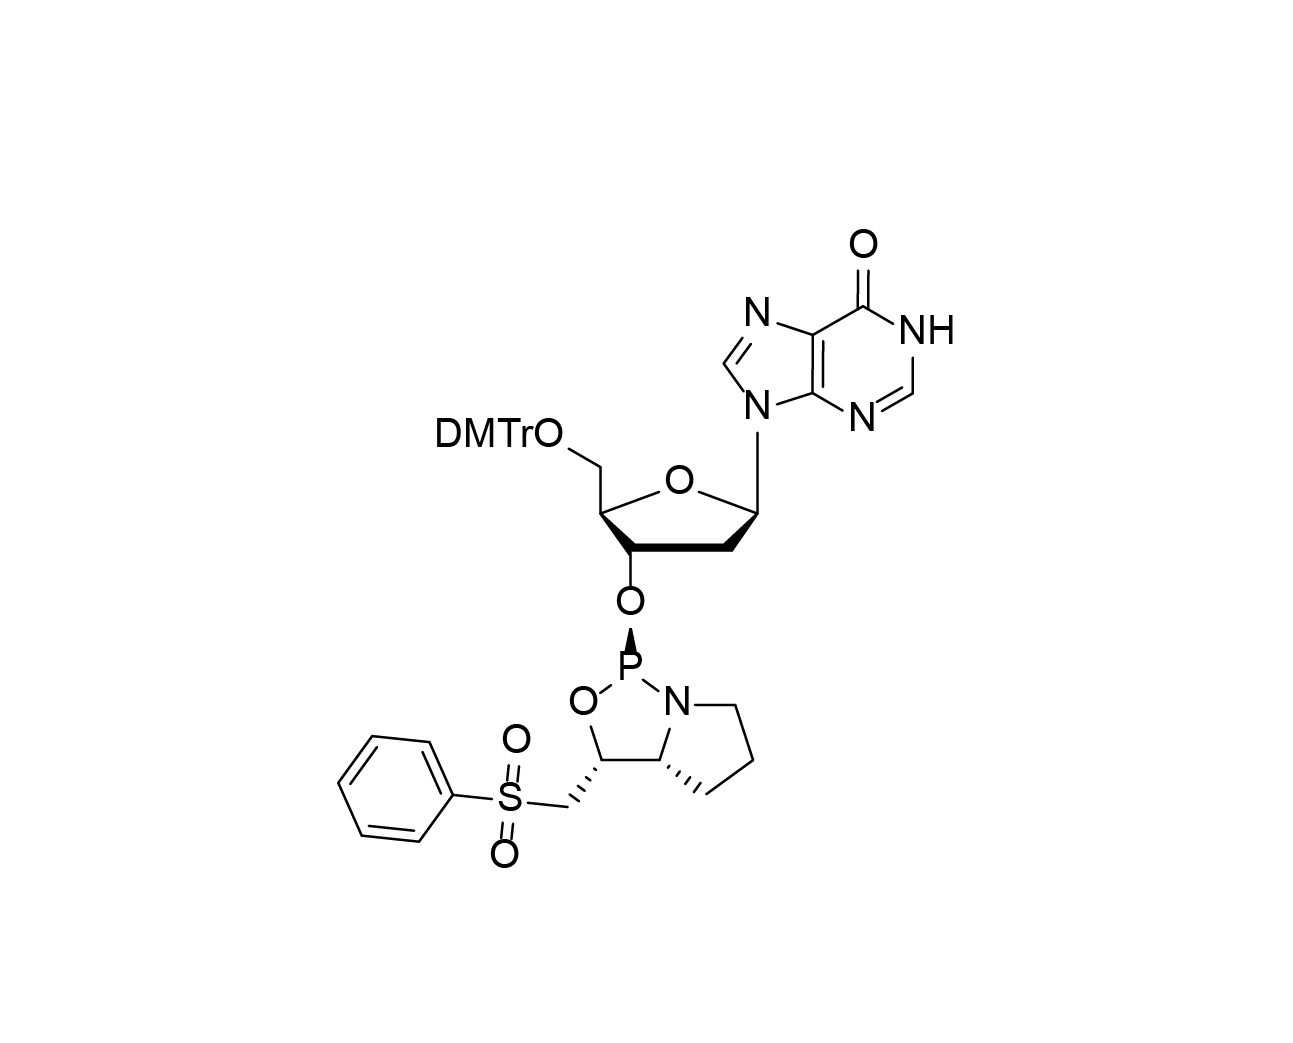 DMTr-dI-3'-(D)-PSM-Phosphoramidite